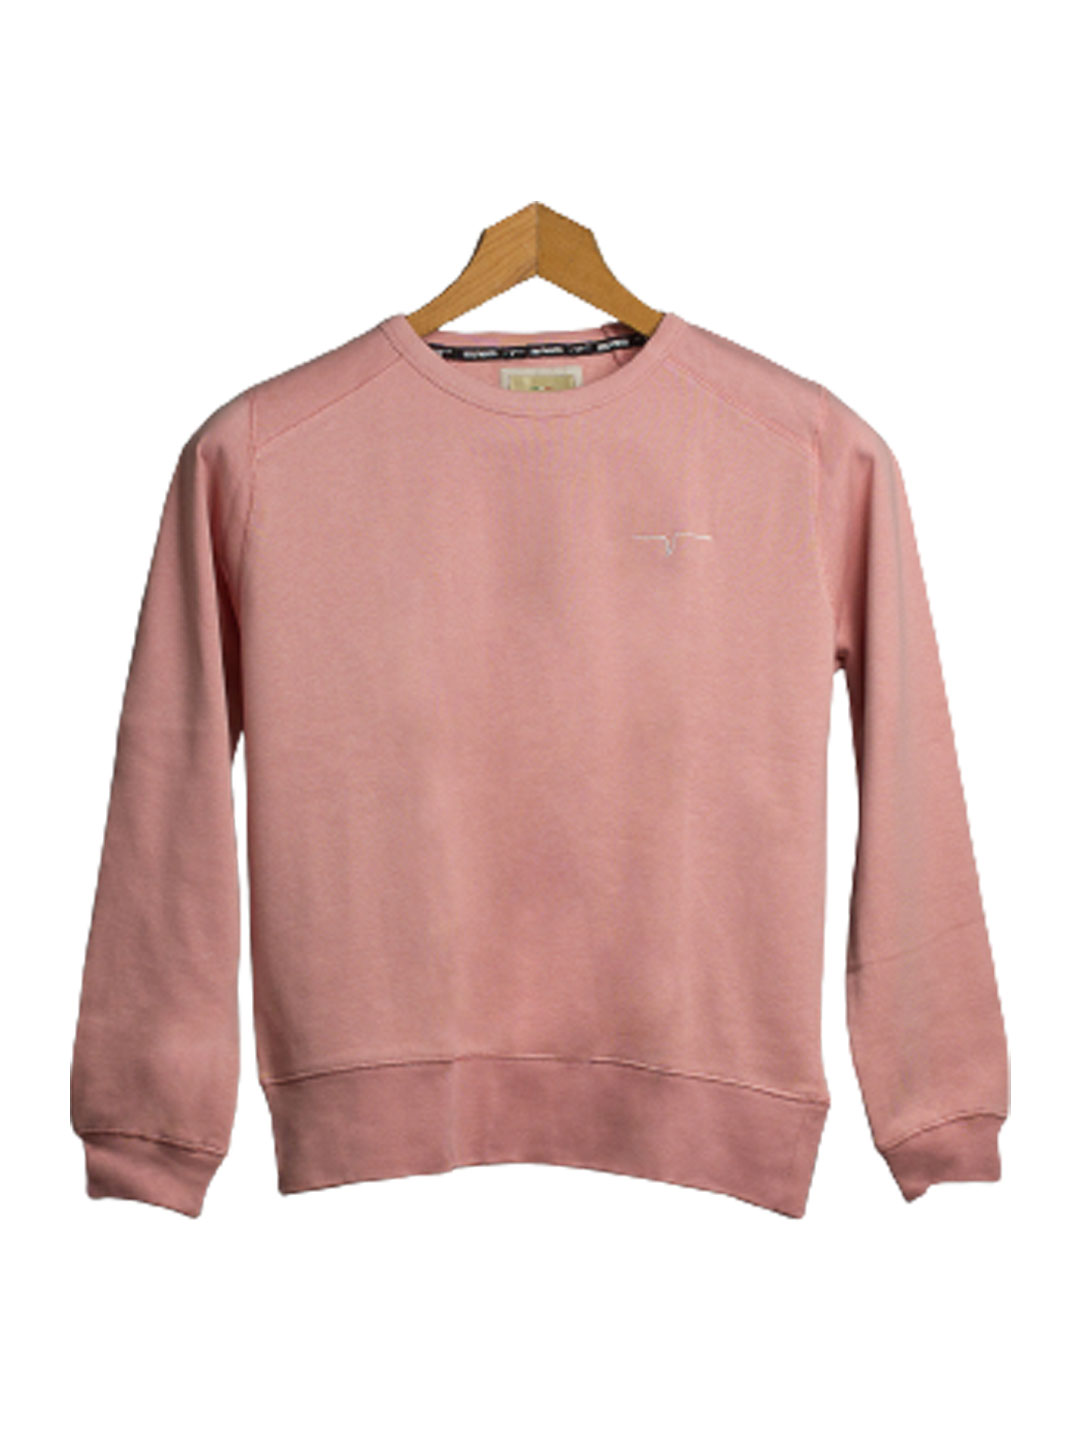 Sweater8